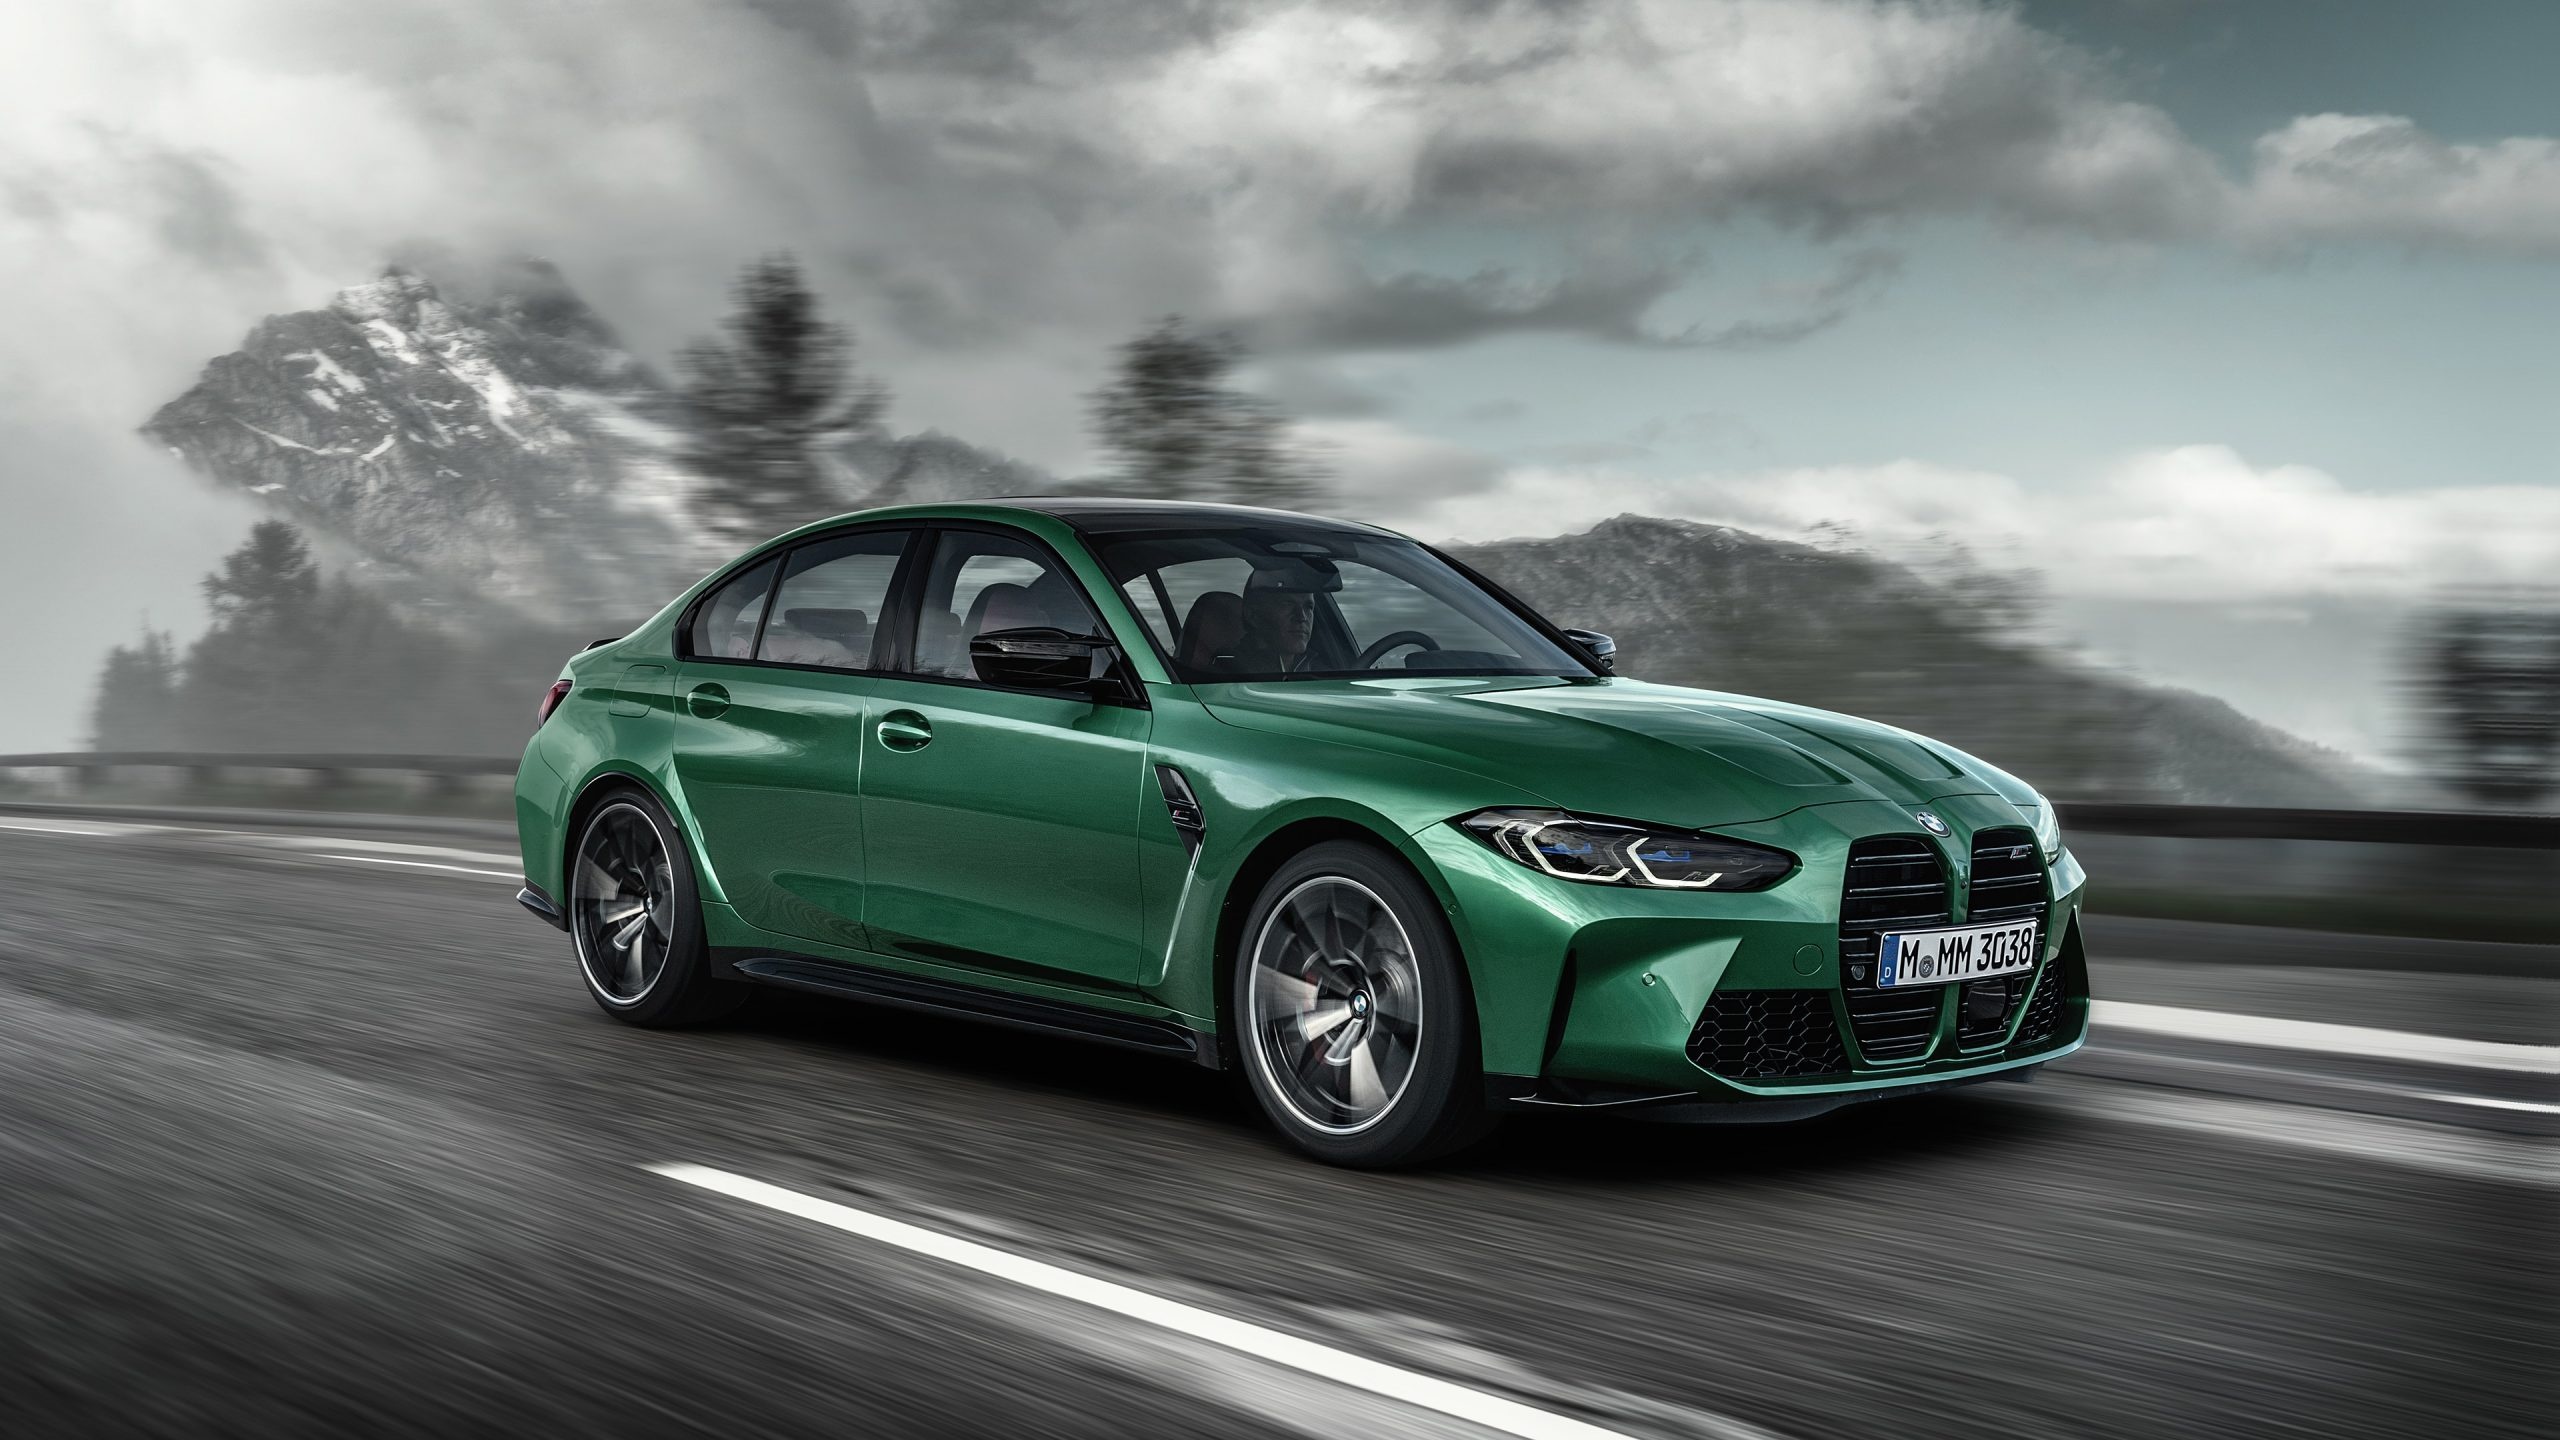 BMW 4 Series, Exquisite wallpapers, Elegance in motion, Automotive craftsmanship, 2560x1440 HD Desktop